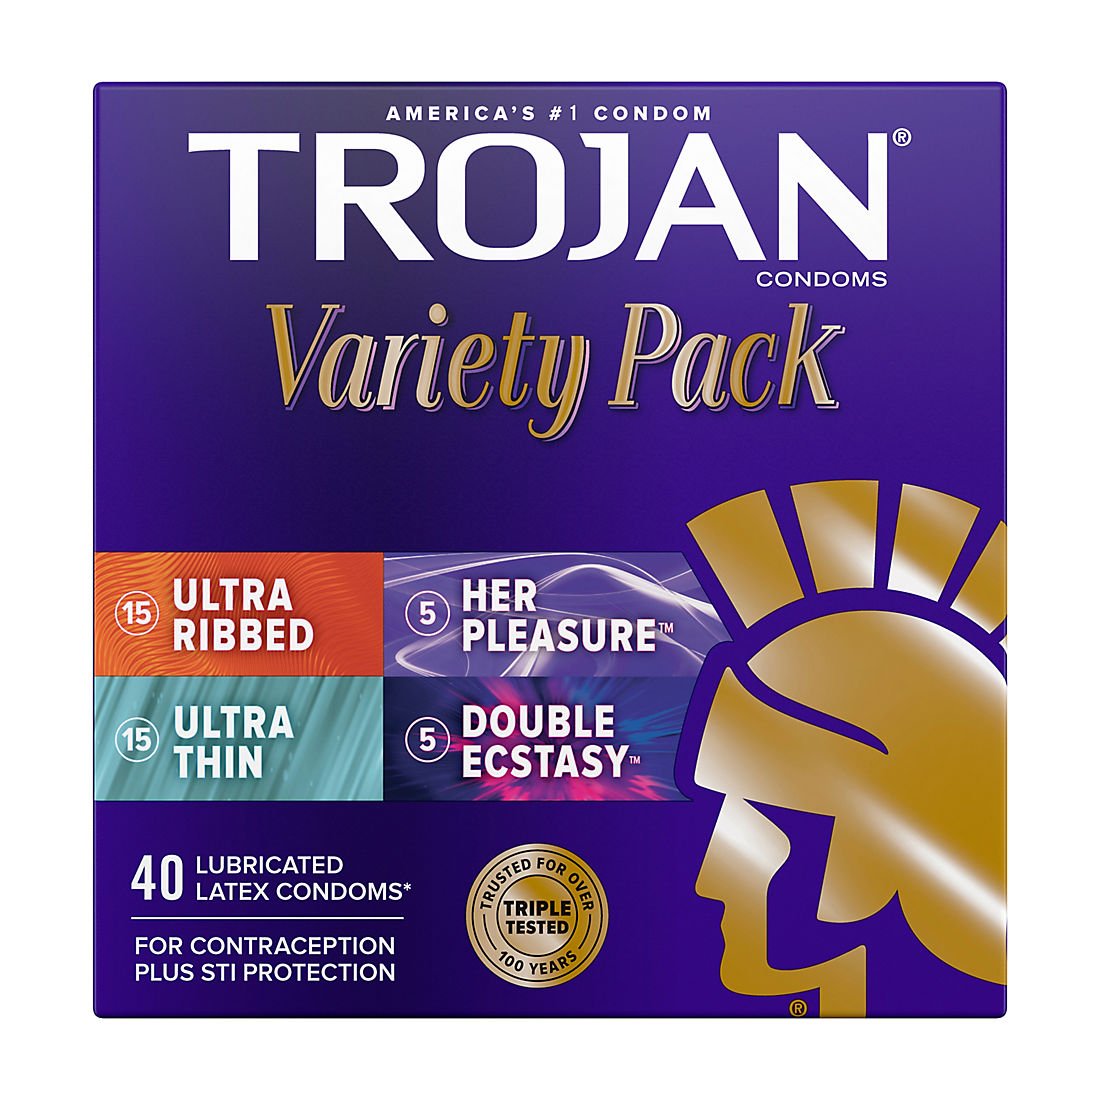 The New Trojan Pleasure Pack 40 Ct.